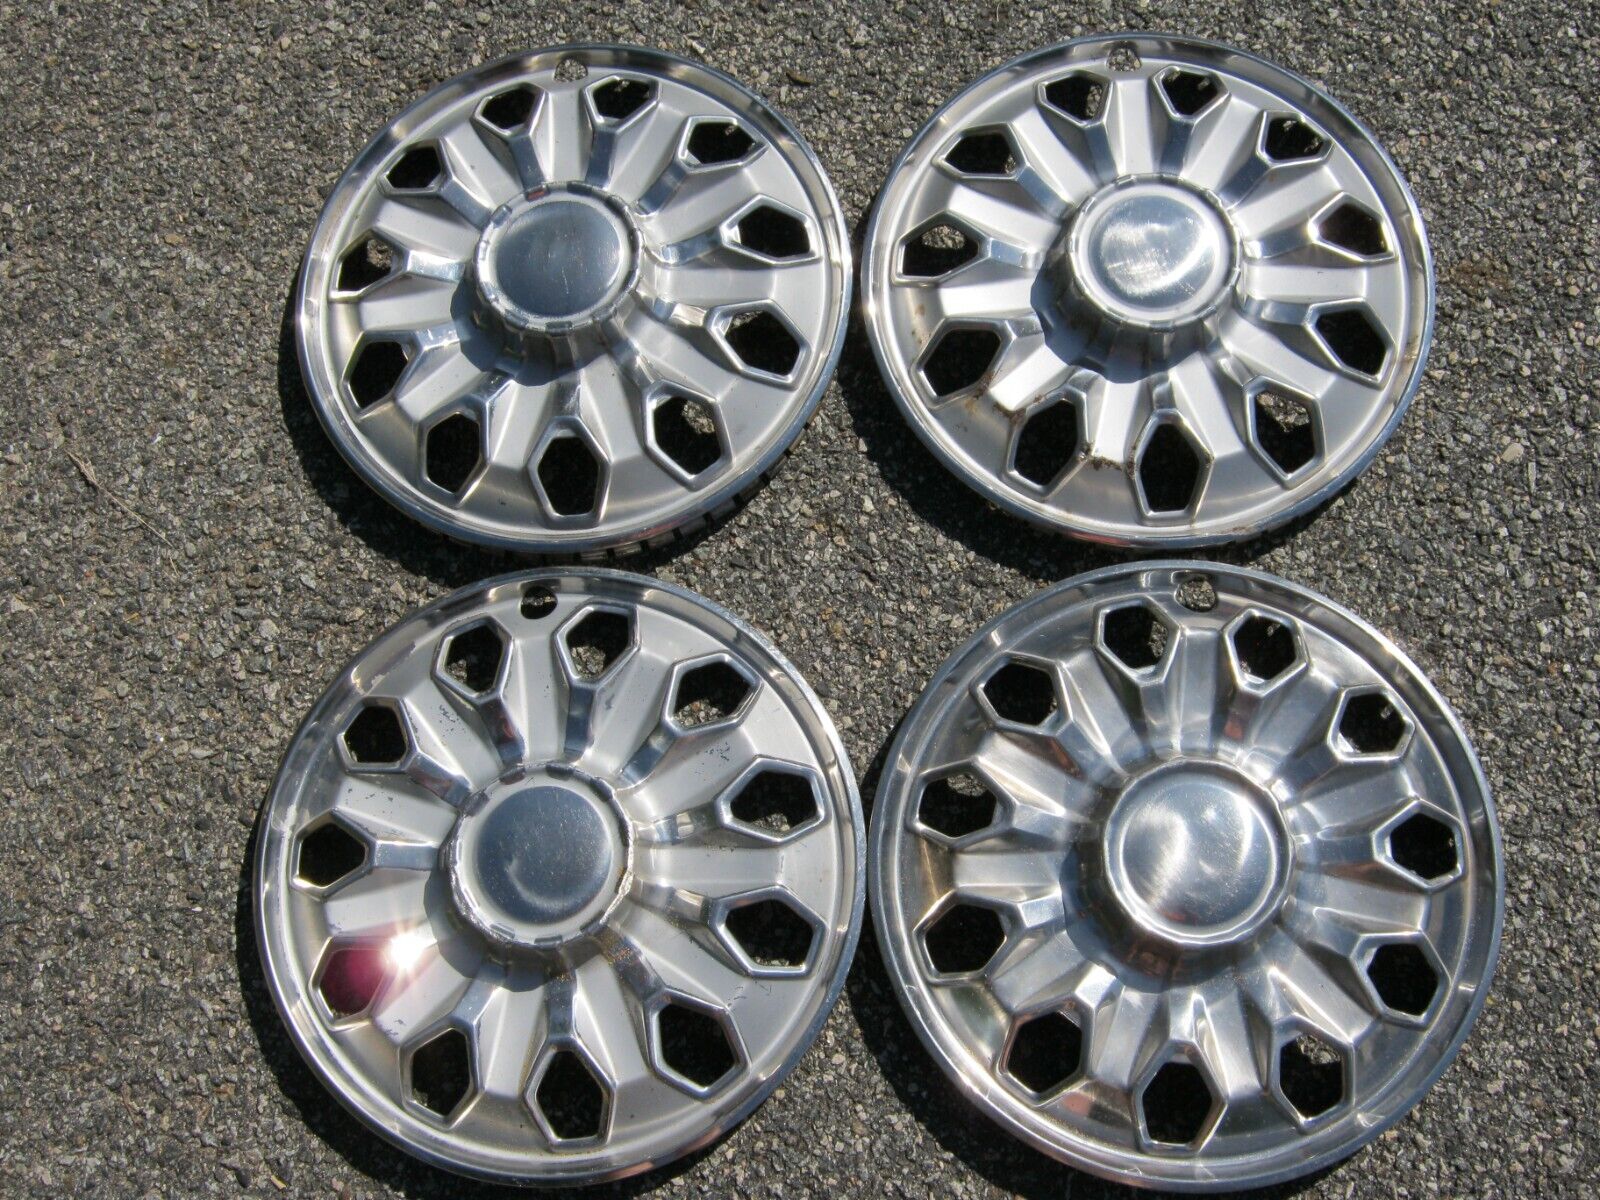 Genuine 1972 to 1976 Toyota Corona Mark II 14 inch hubcaps wheel covers